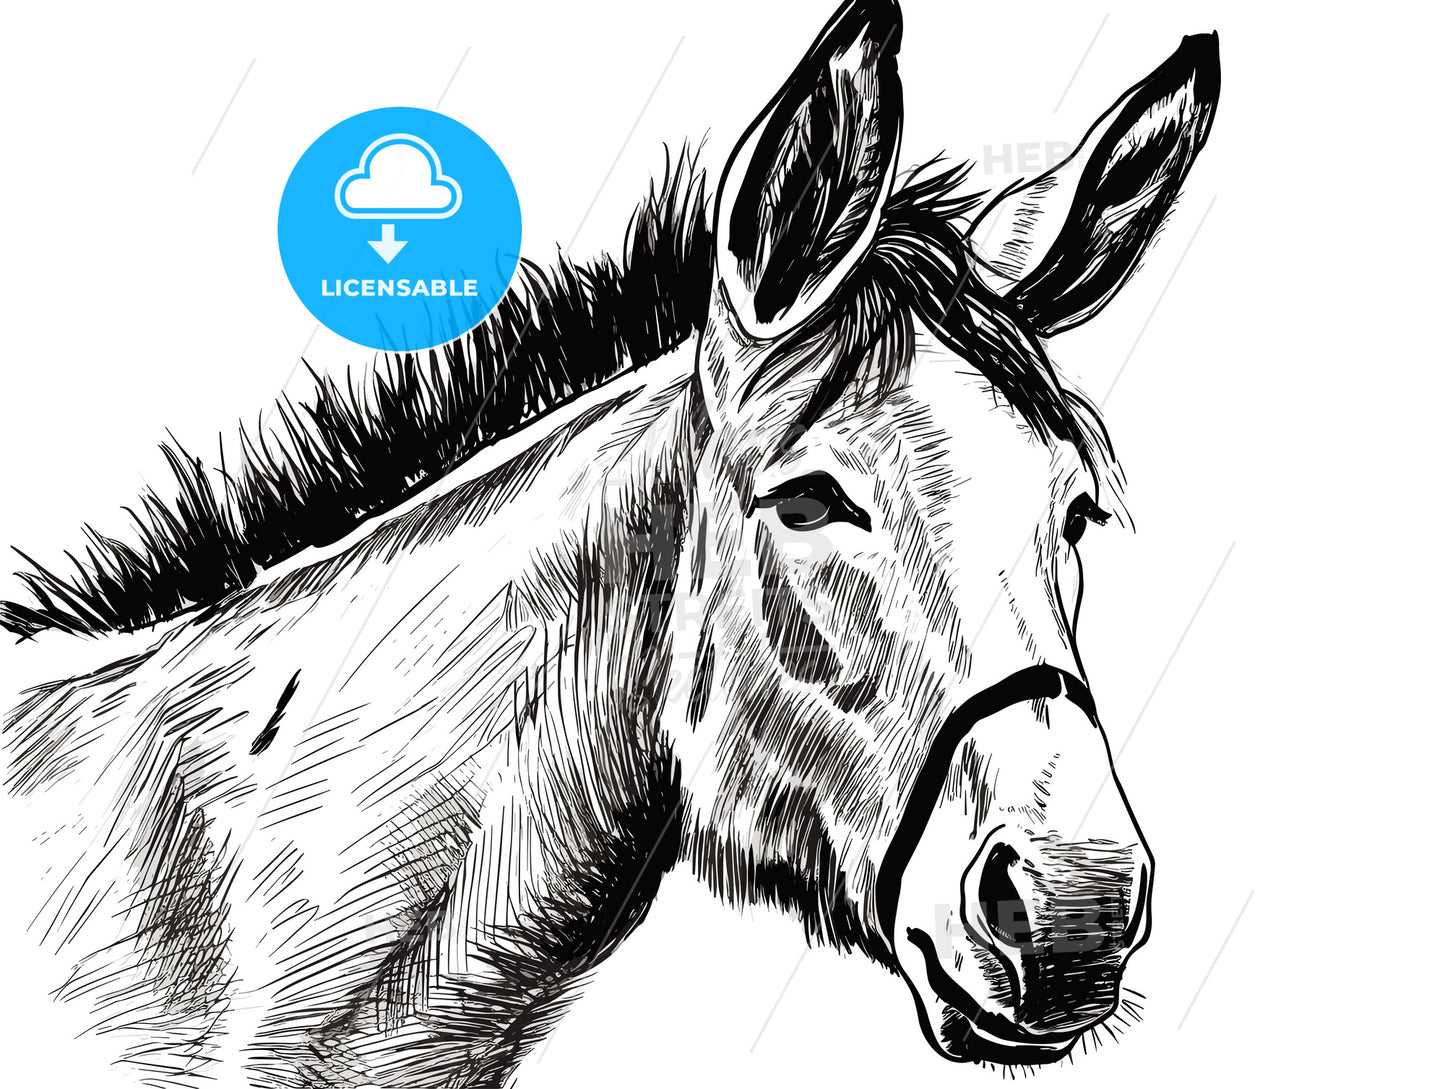 Head shot of Spanish Donkey on the island of Bonaire